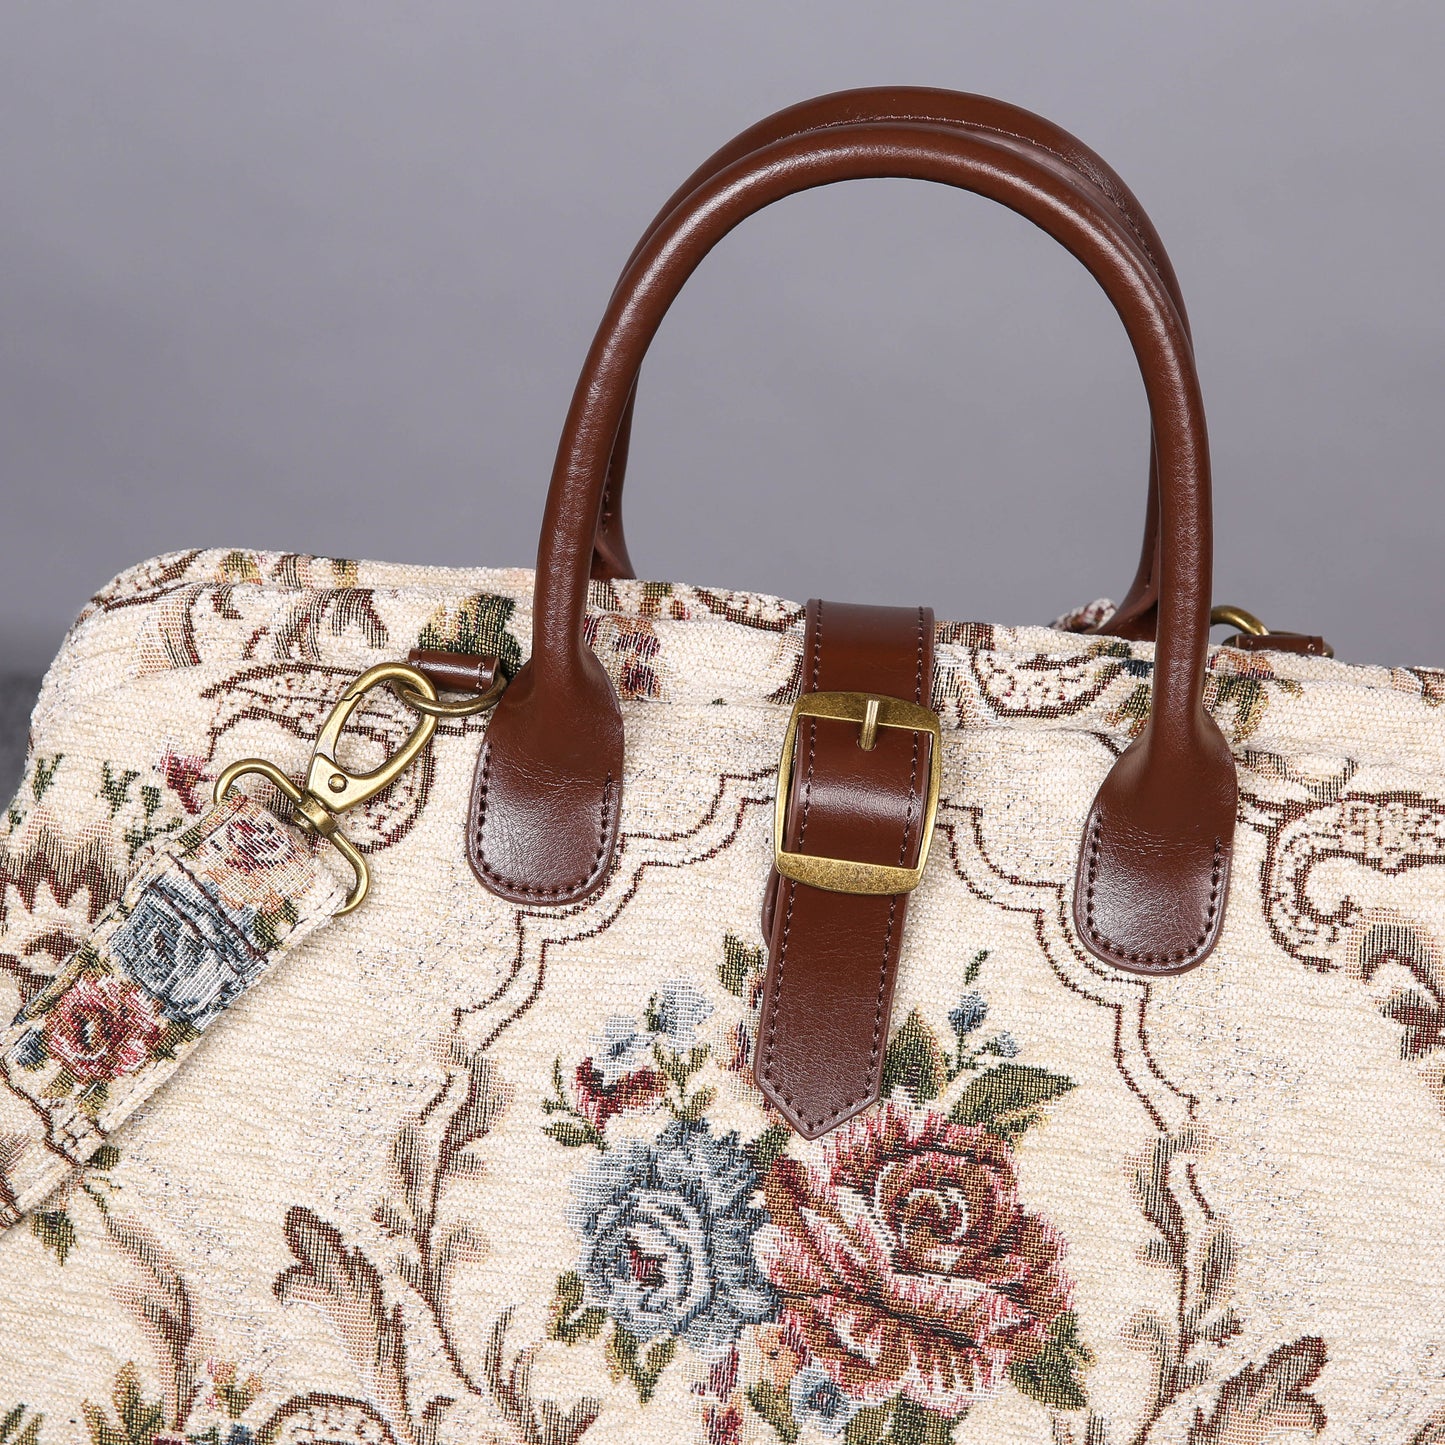 Mary Poppins Carpet Bag Floral Cream